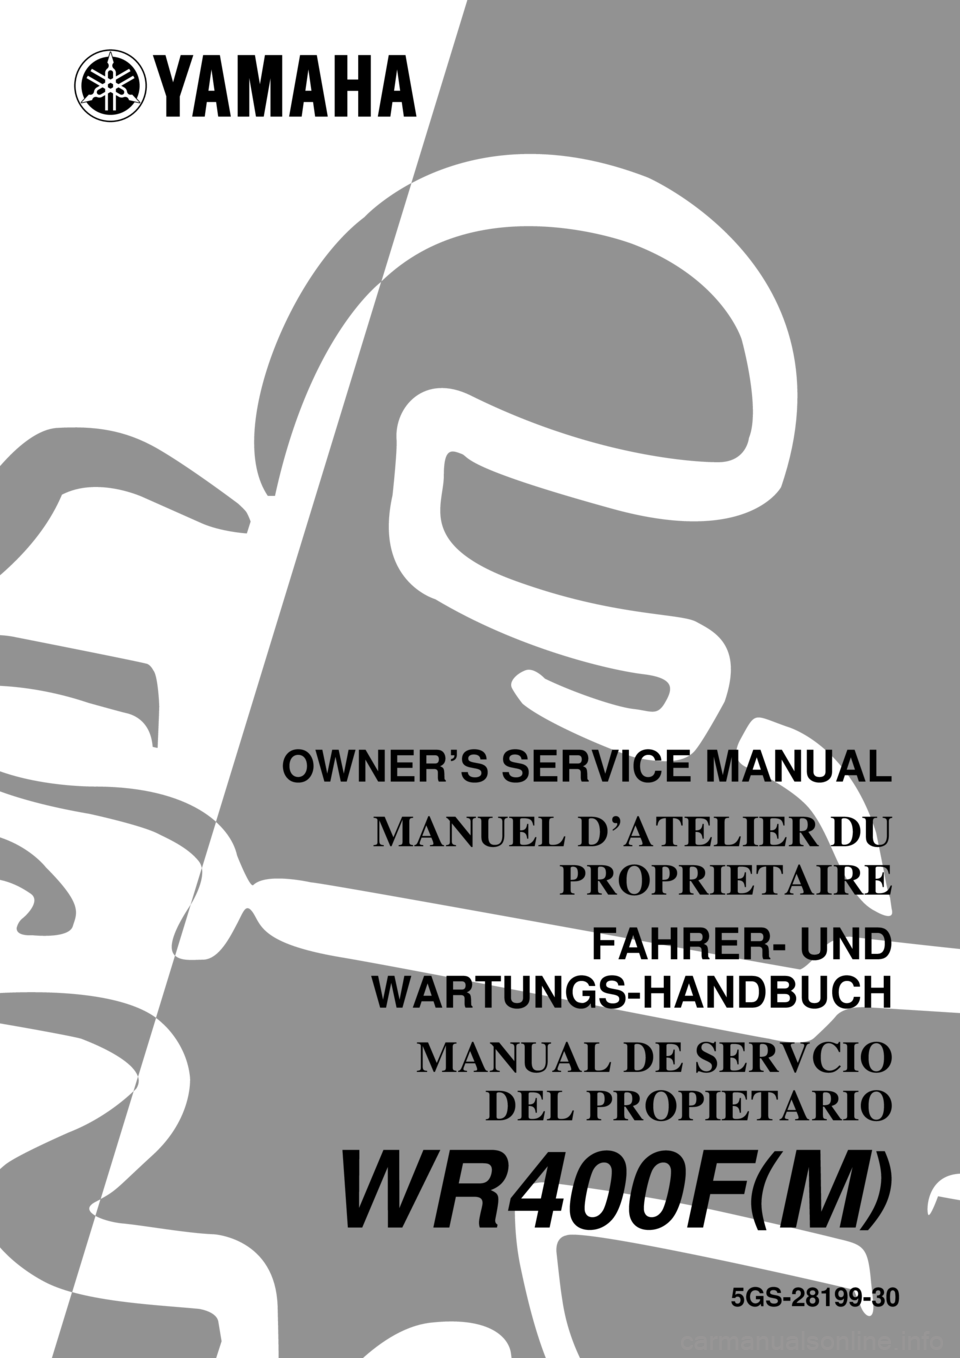 YAMAHA WR 400F 2000  Notices Demploi (in French) 5GS-28199-30
WR400F(M)
OWNER’S SERVICE MANUAL
MANUEL D’ATELIER DU
PROPRIETAIRE
FAHRER- UND
WARTUNGS-HANDBUCH
MANUAL DE SERVCIO
DEL PROPIETARIO 